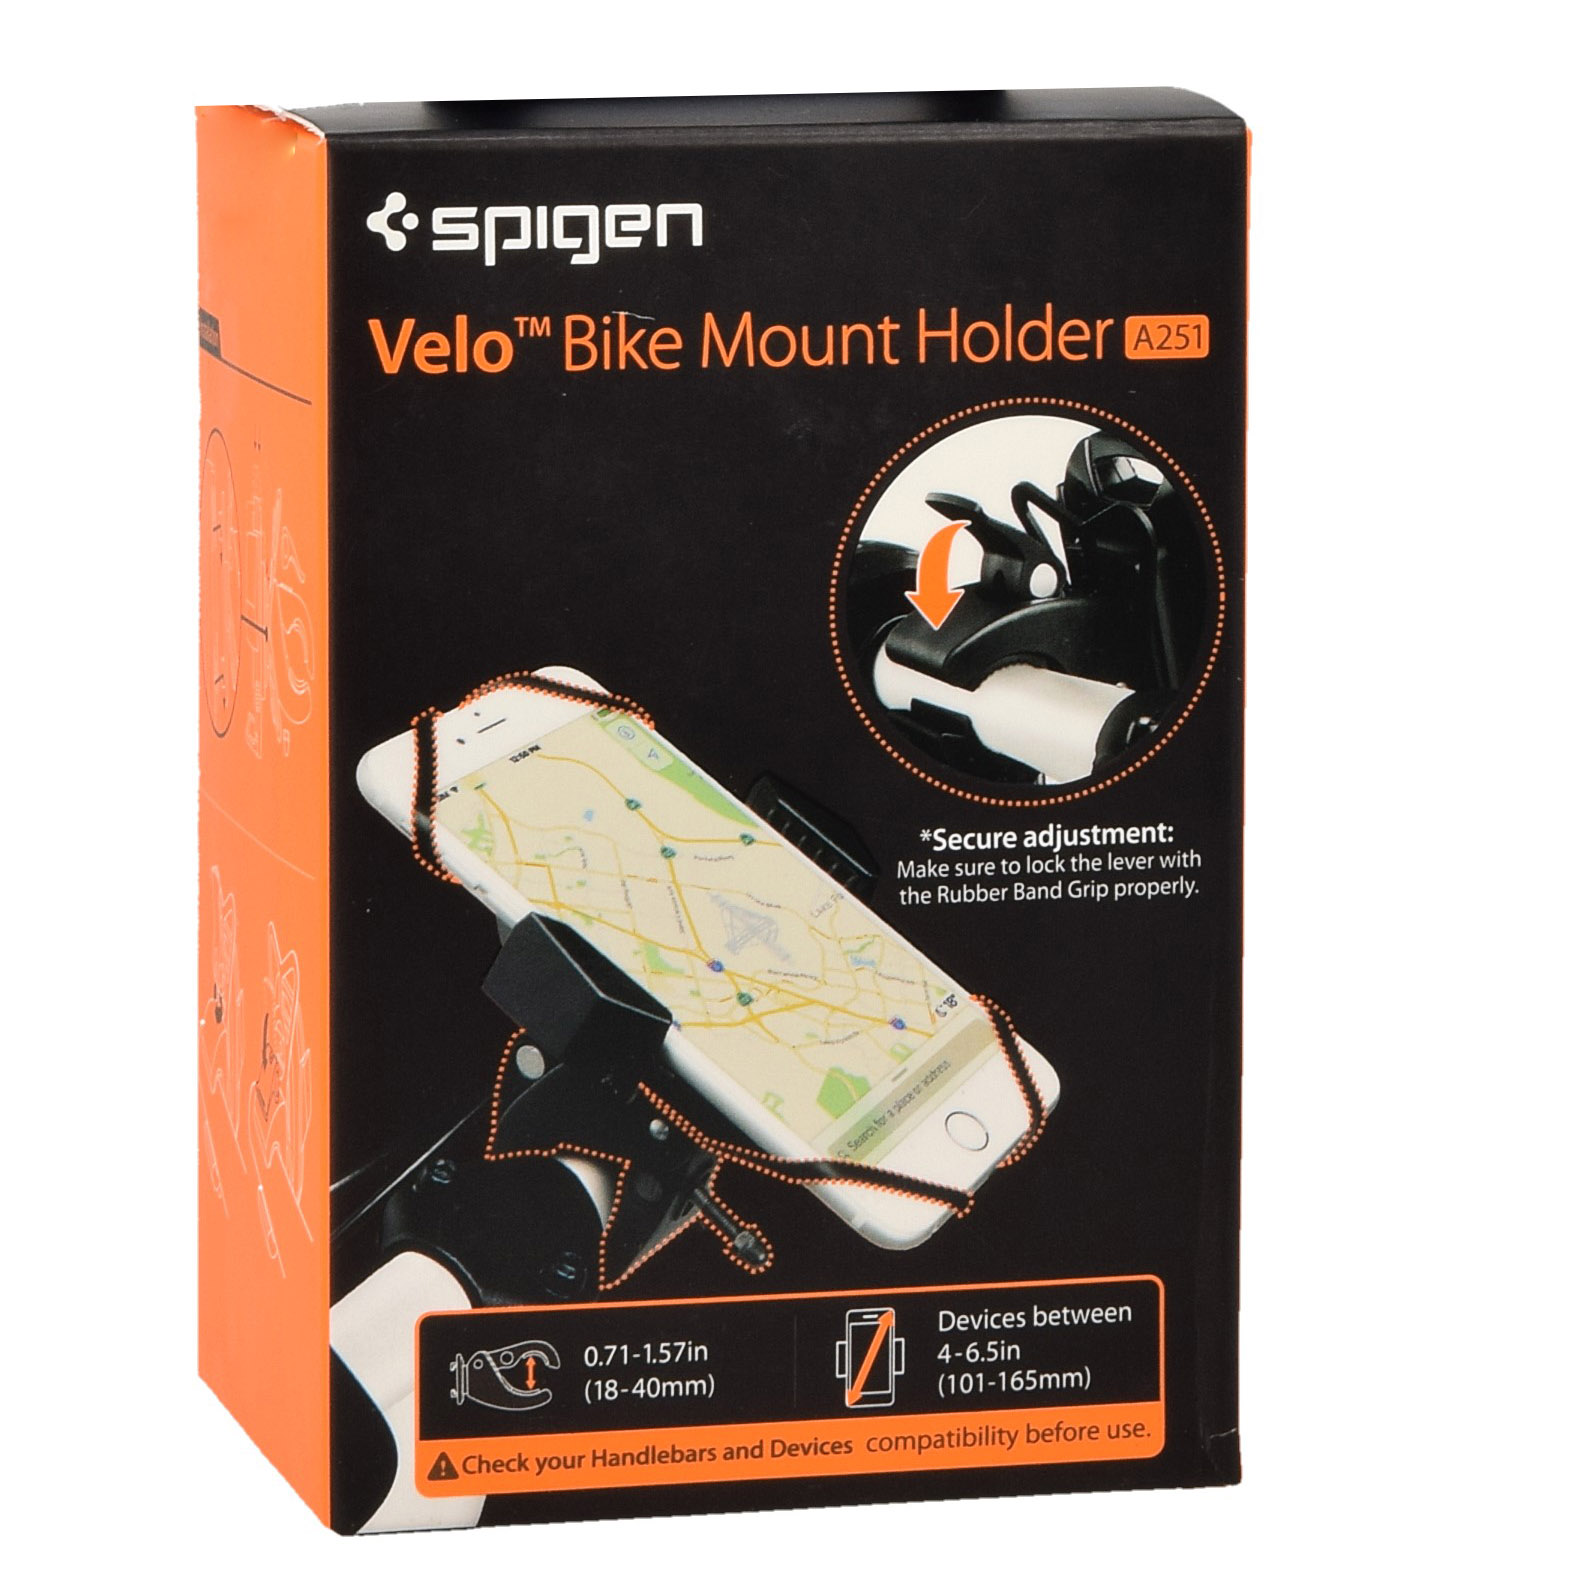 Uchwyt rowerowy Spigen Velo Bike Mount Holder A251, czarny.